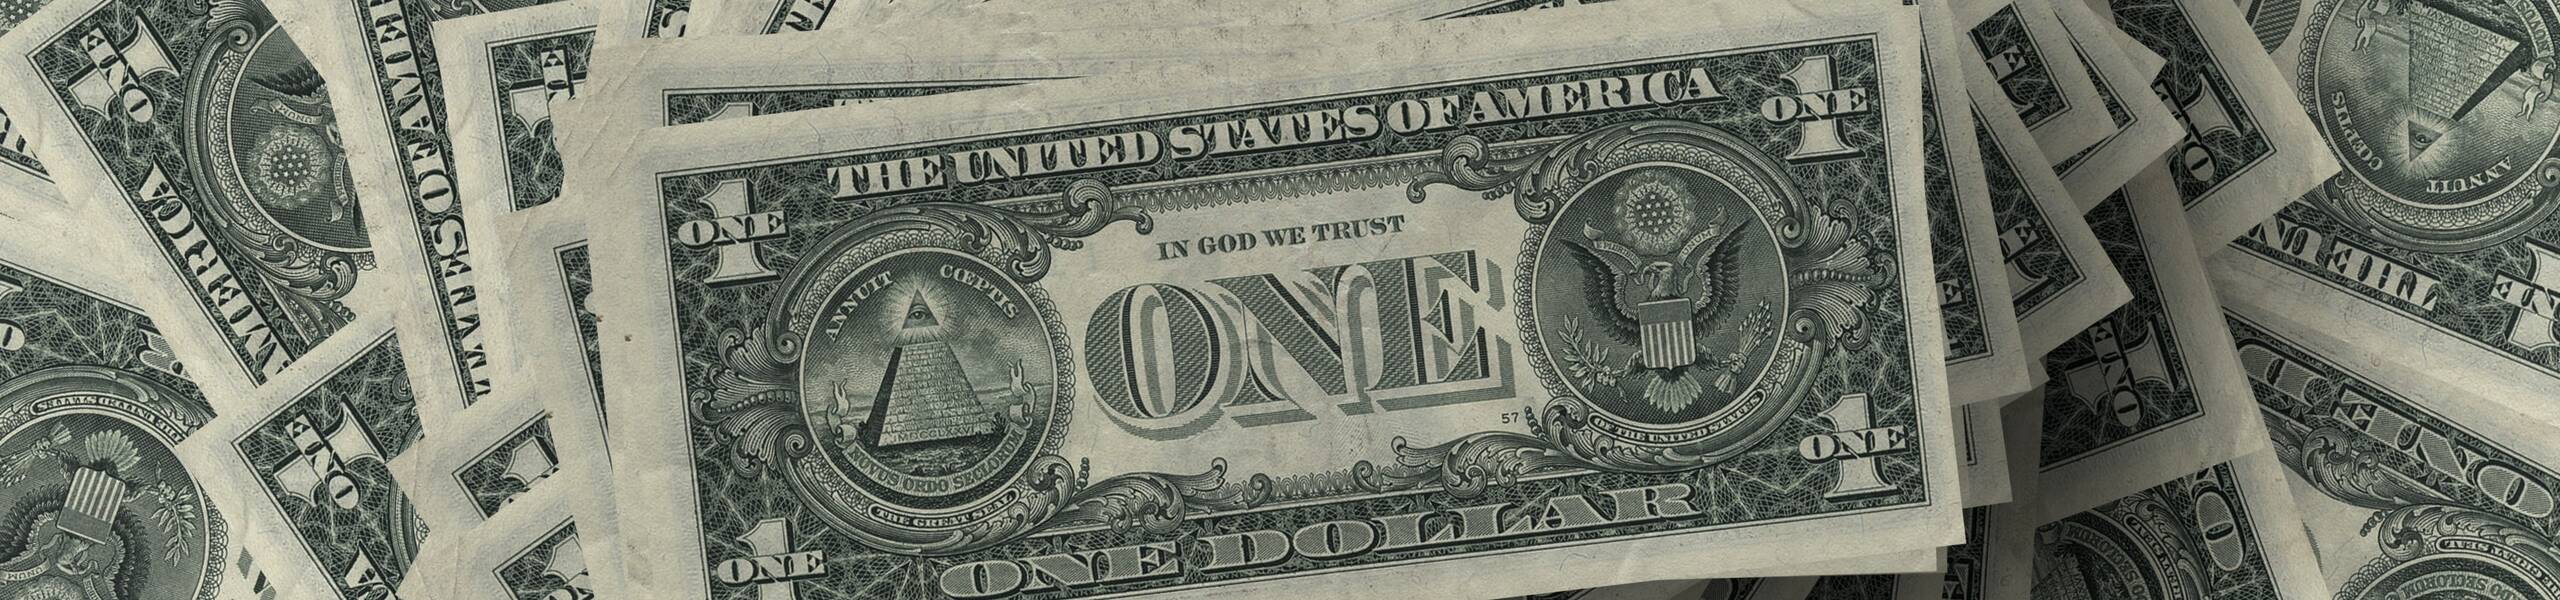 Dólar estadounidense con prospectos bajistas